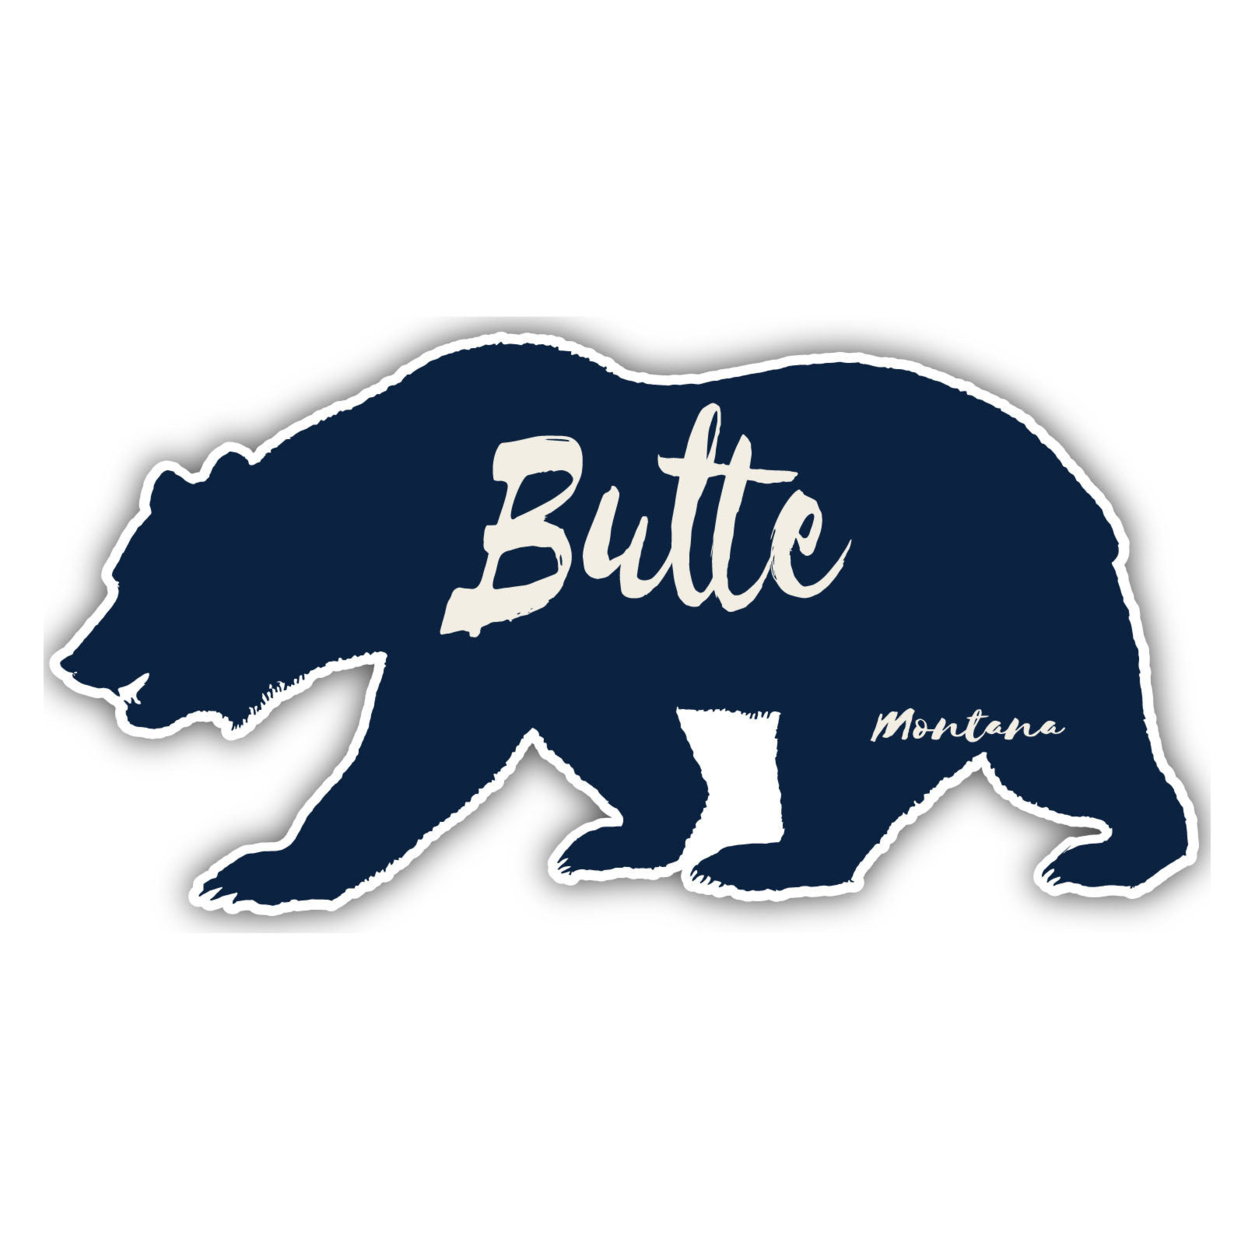 Butte Montana Souvenir Decorative Stickers (Choose Theme And Size) - Single Unit, 4-Inch, Camp Life